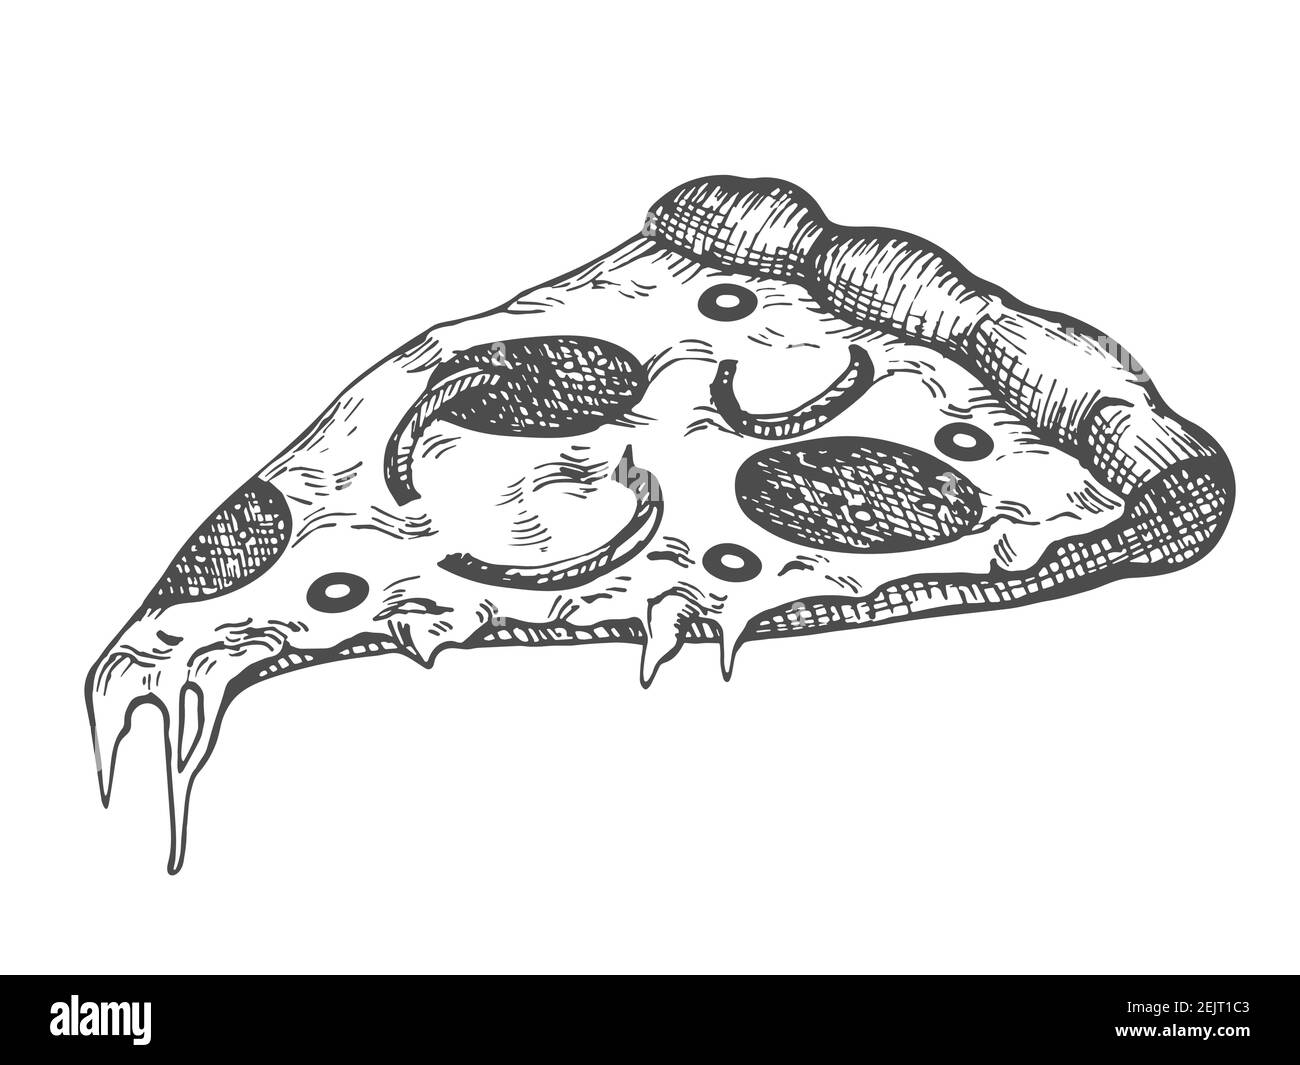 Pizza Slice 3 | Get Stamped